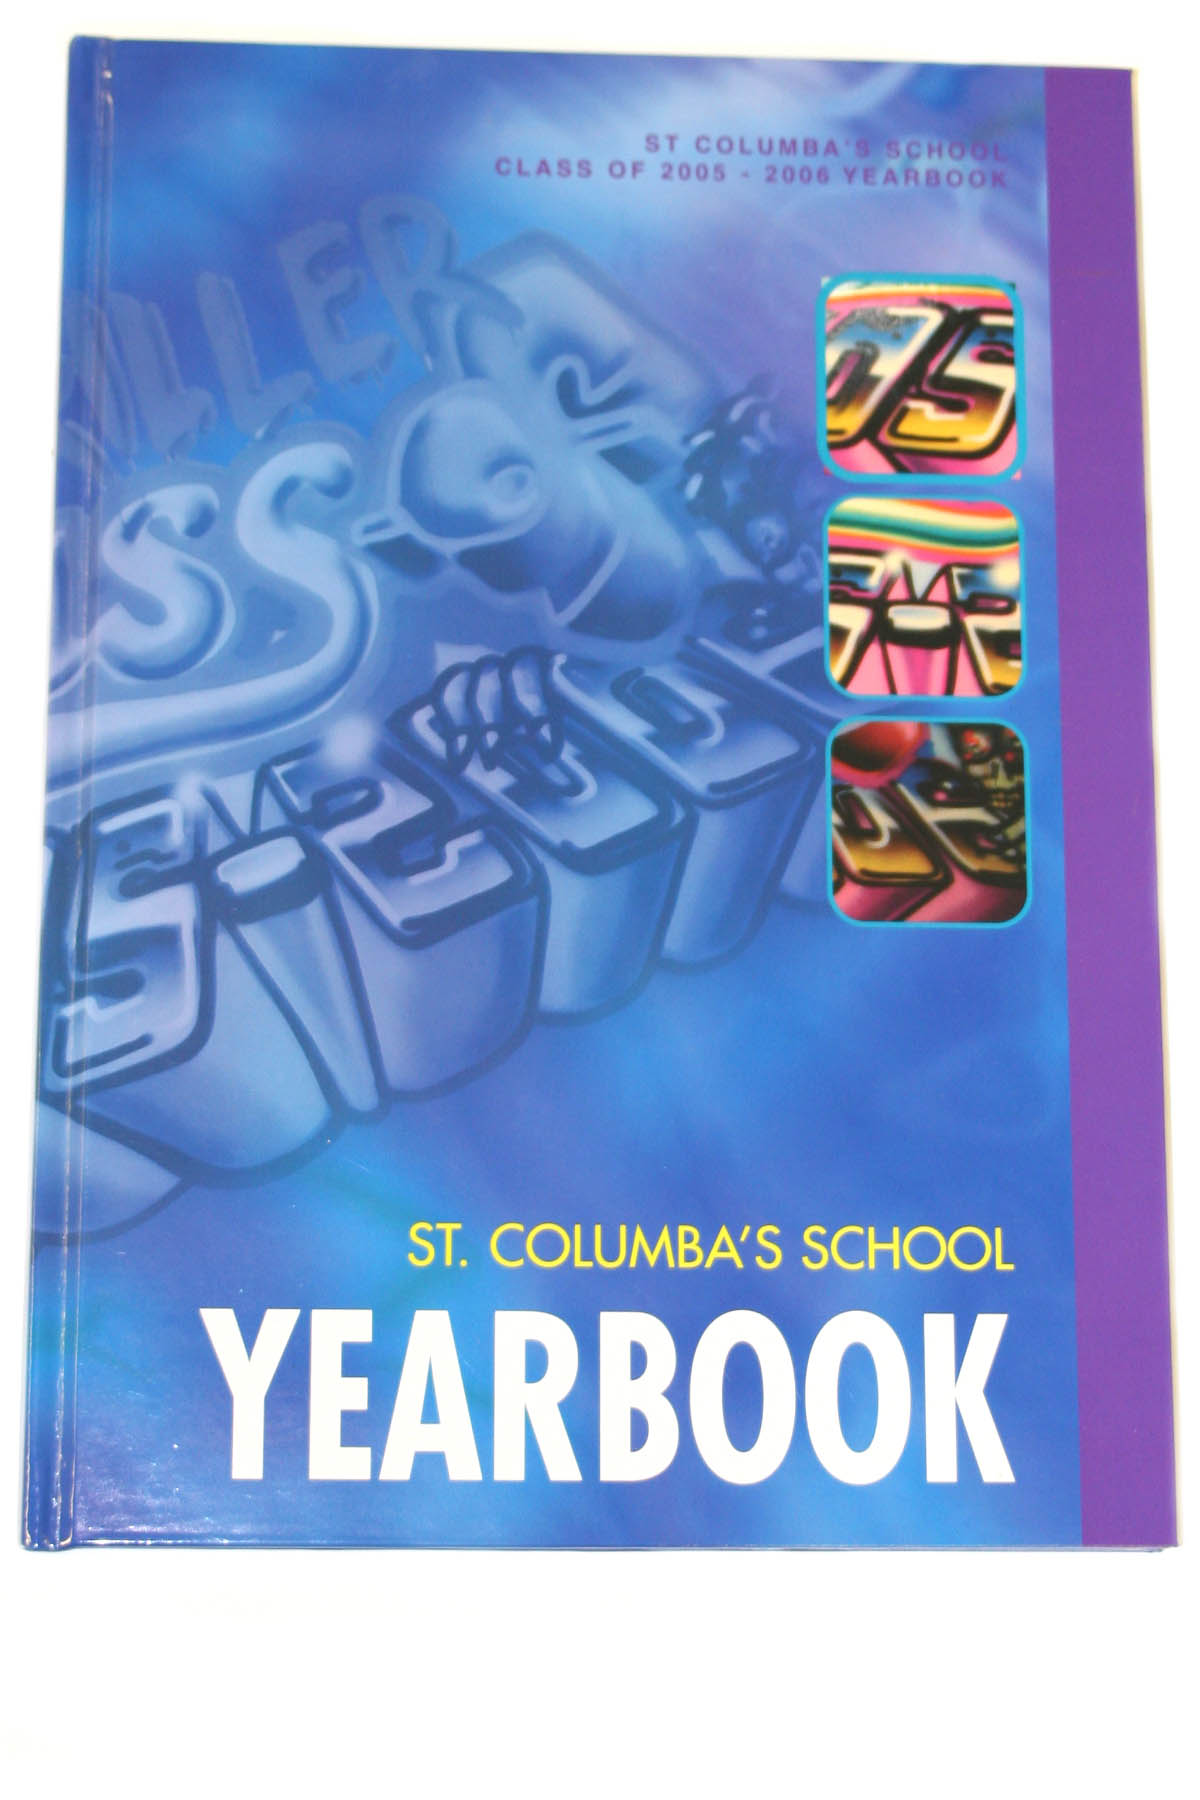 Small run school year book